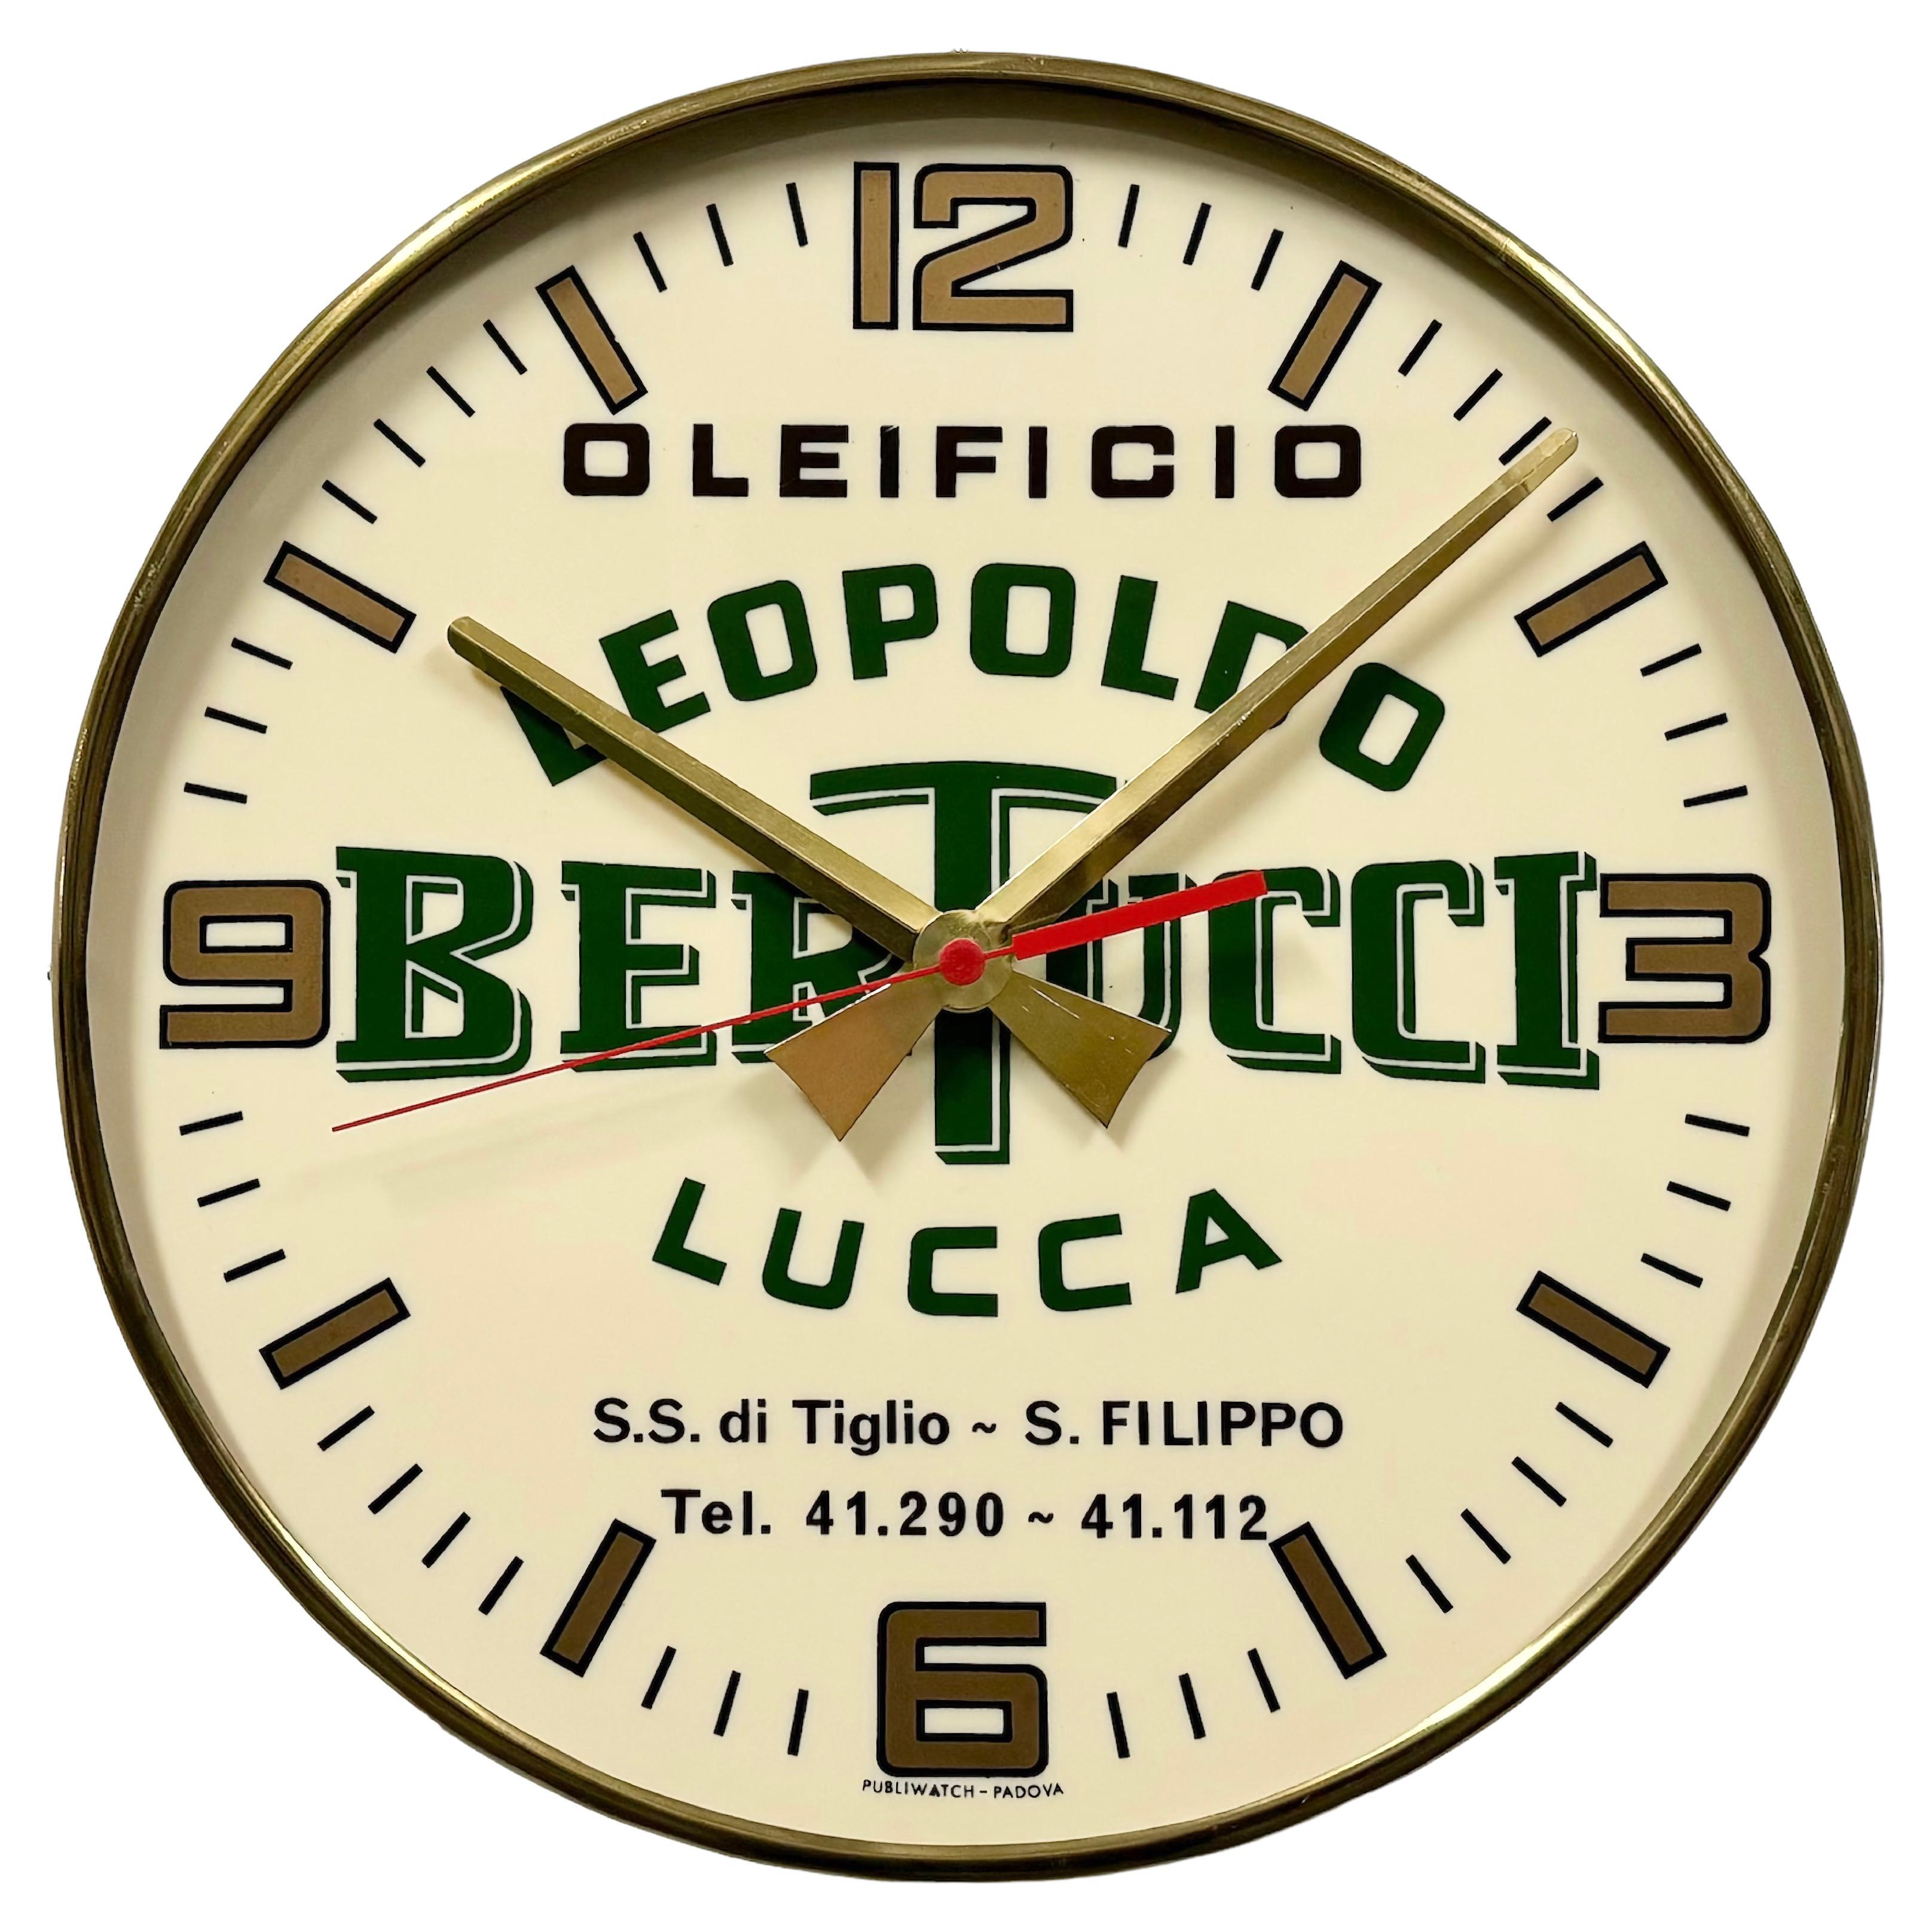 Vintage Italian Advertising Wall Clock, 1970s